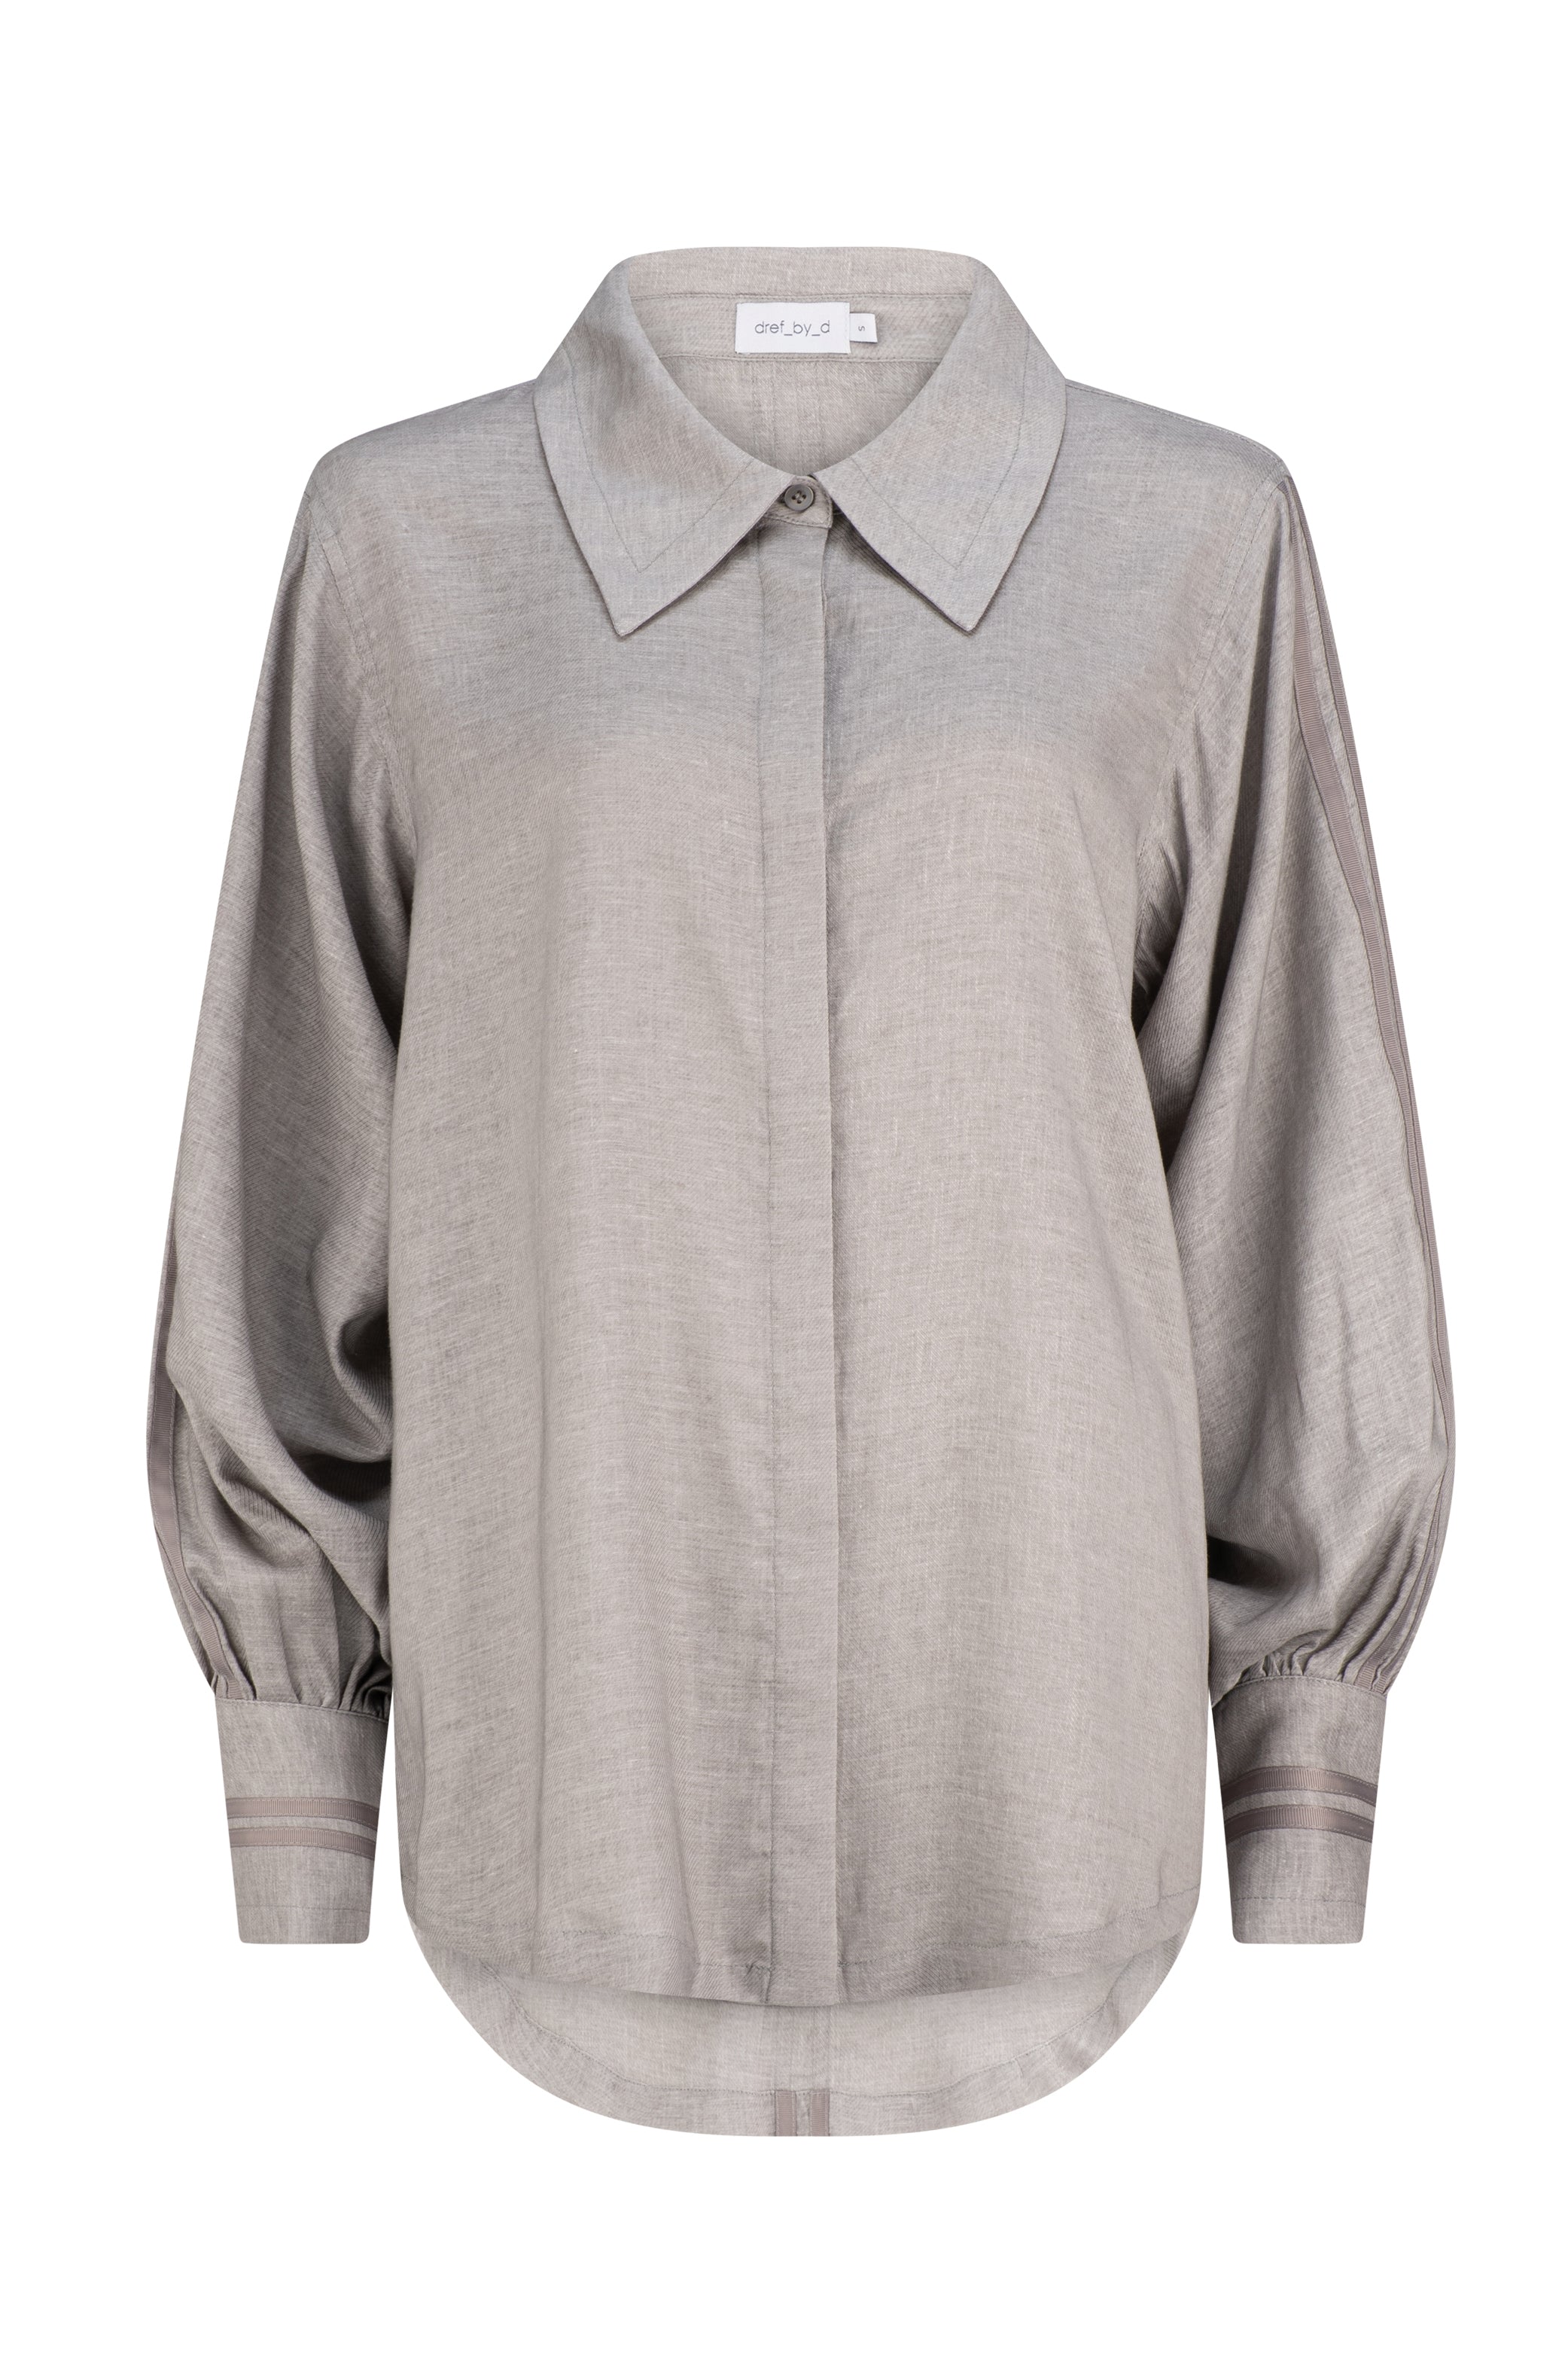 Dref By D Women's Grey Laguna Shirt - Pumice In Gray